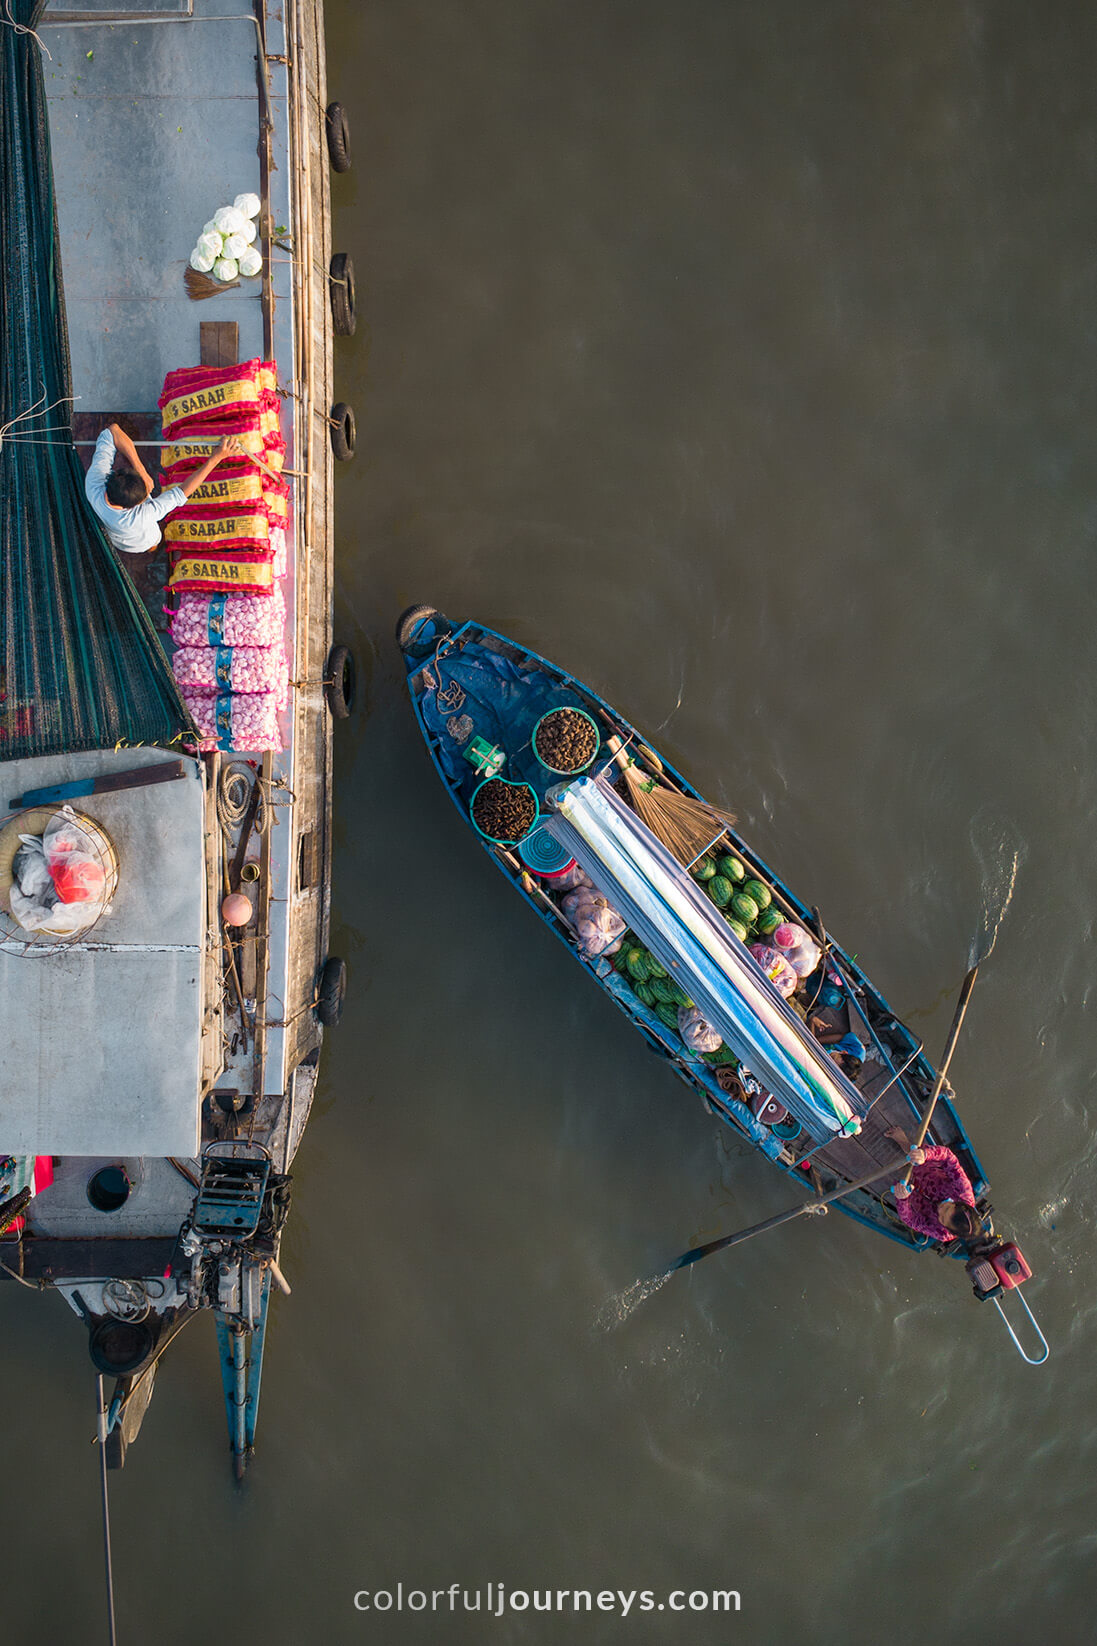 Birds-eye view of boats in the Mekong Delta, Vietnam